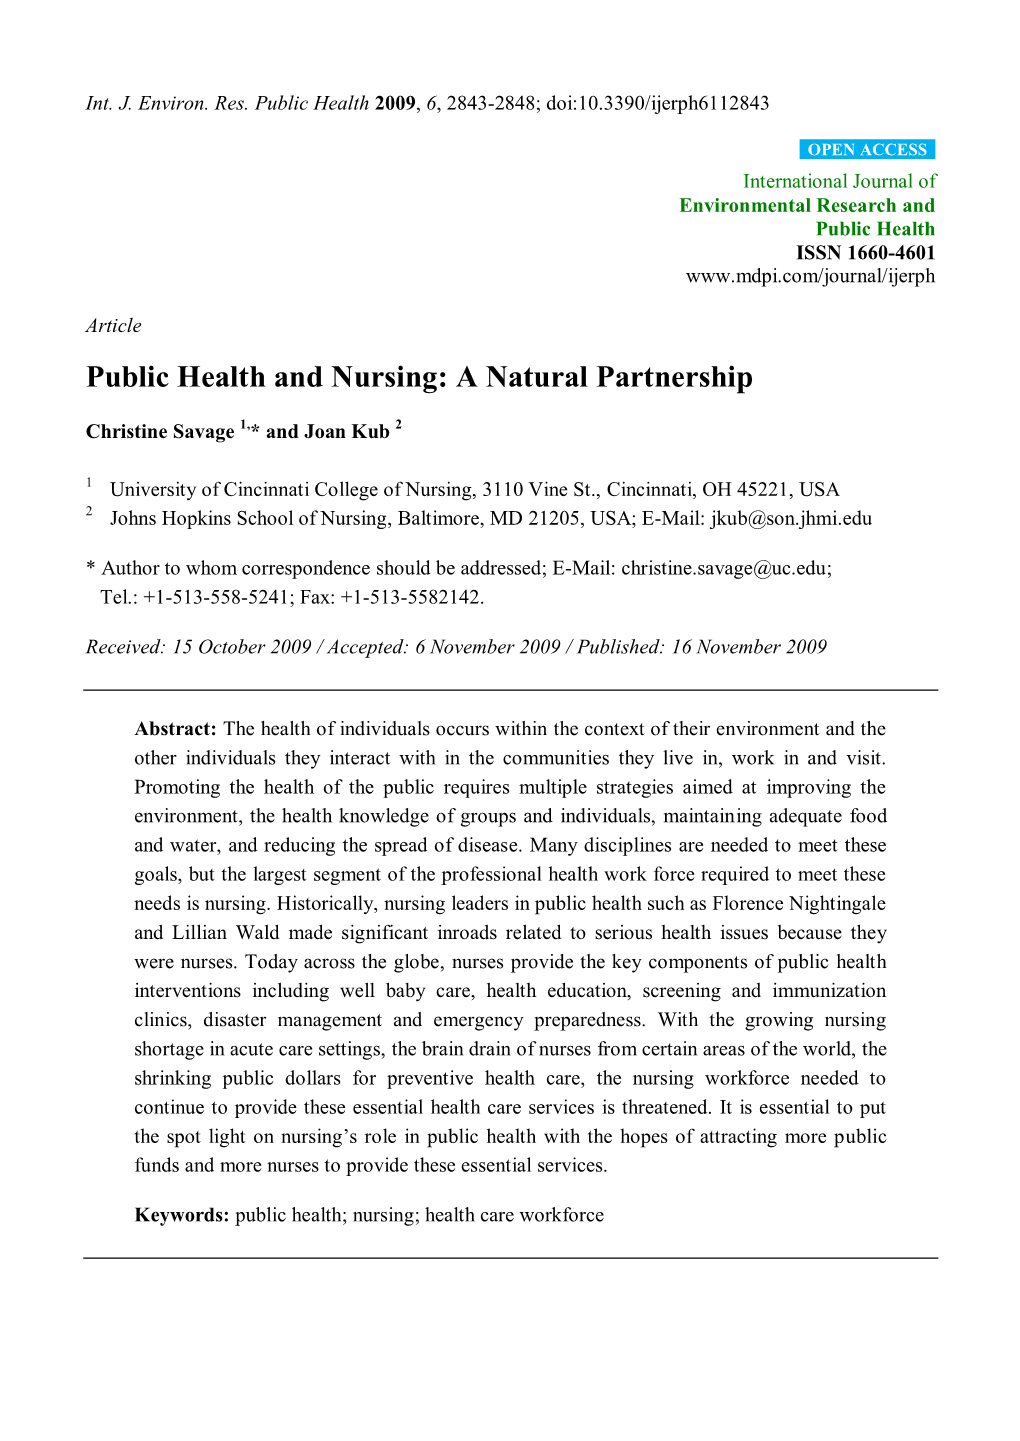 Public Health and Nursing: a Natural Partnership